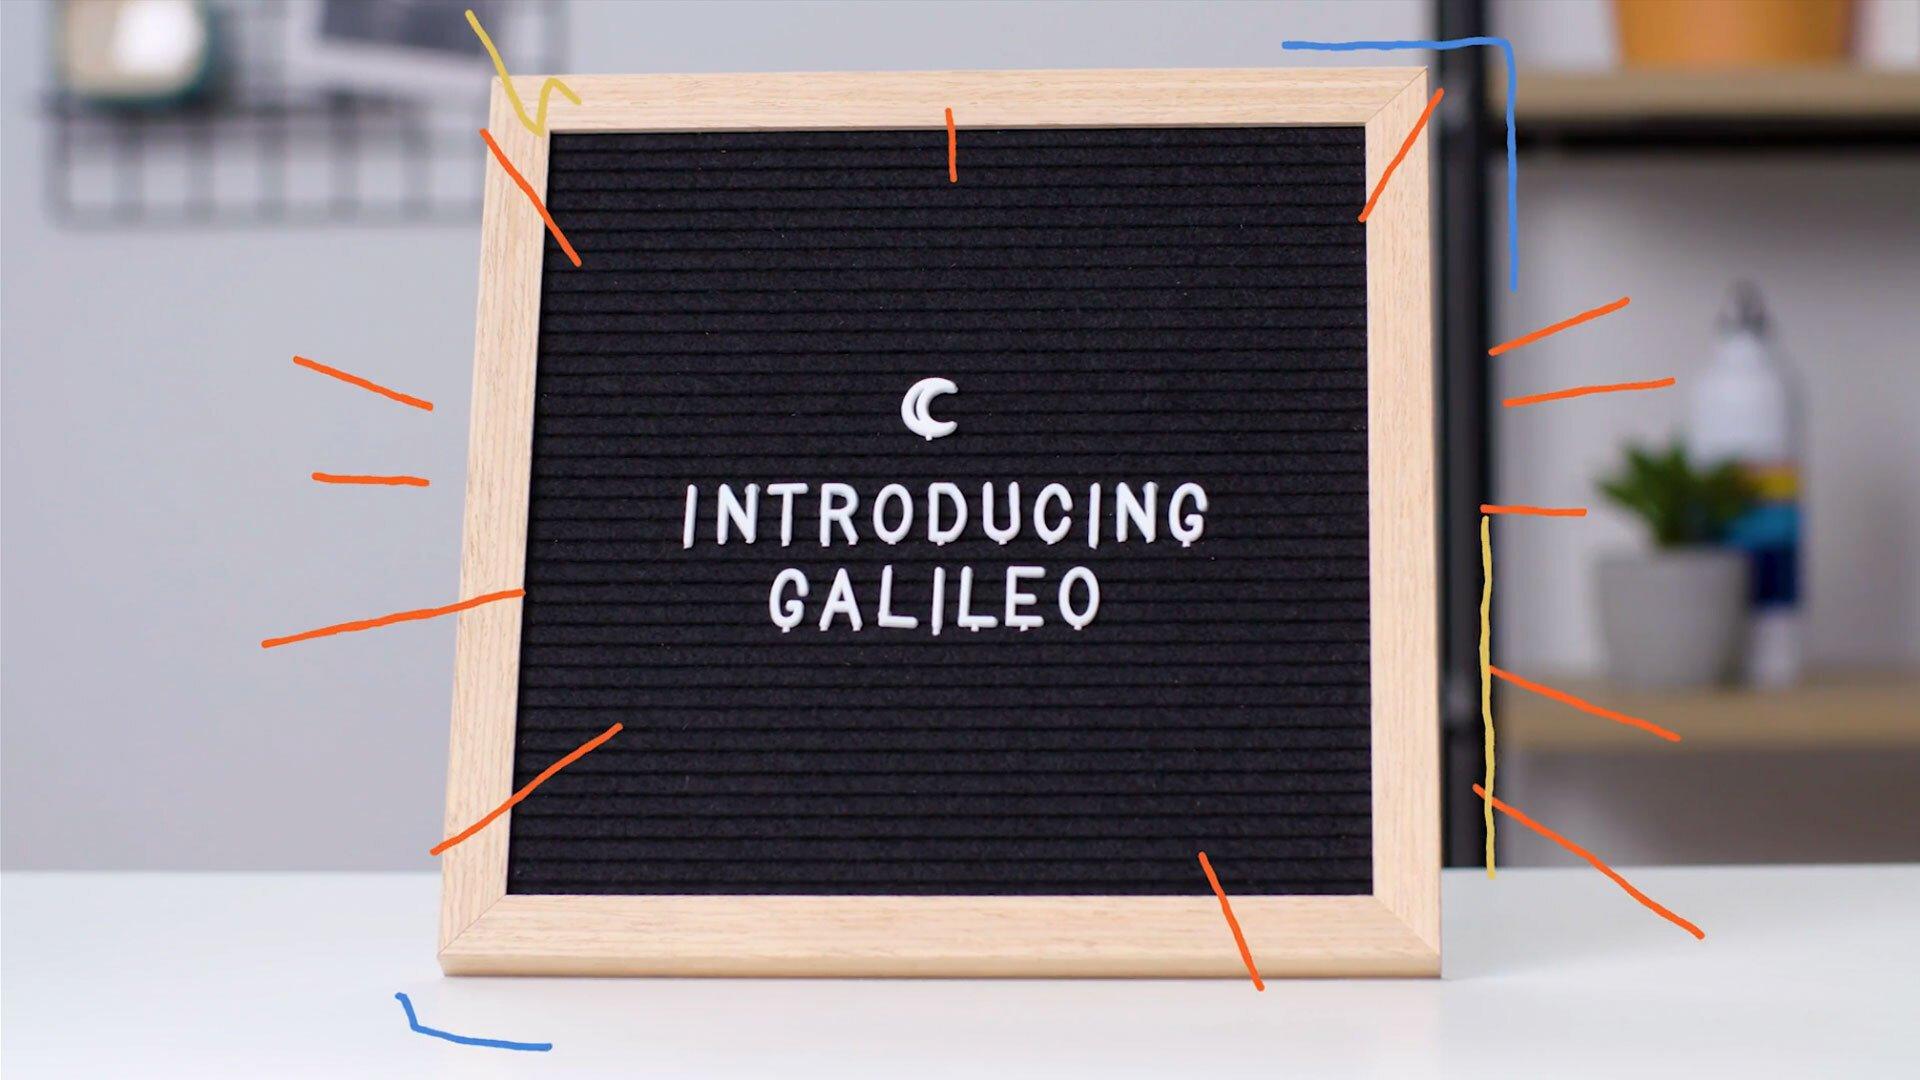 "Introducing Galileo" on art board